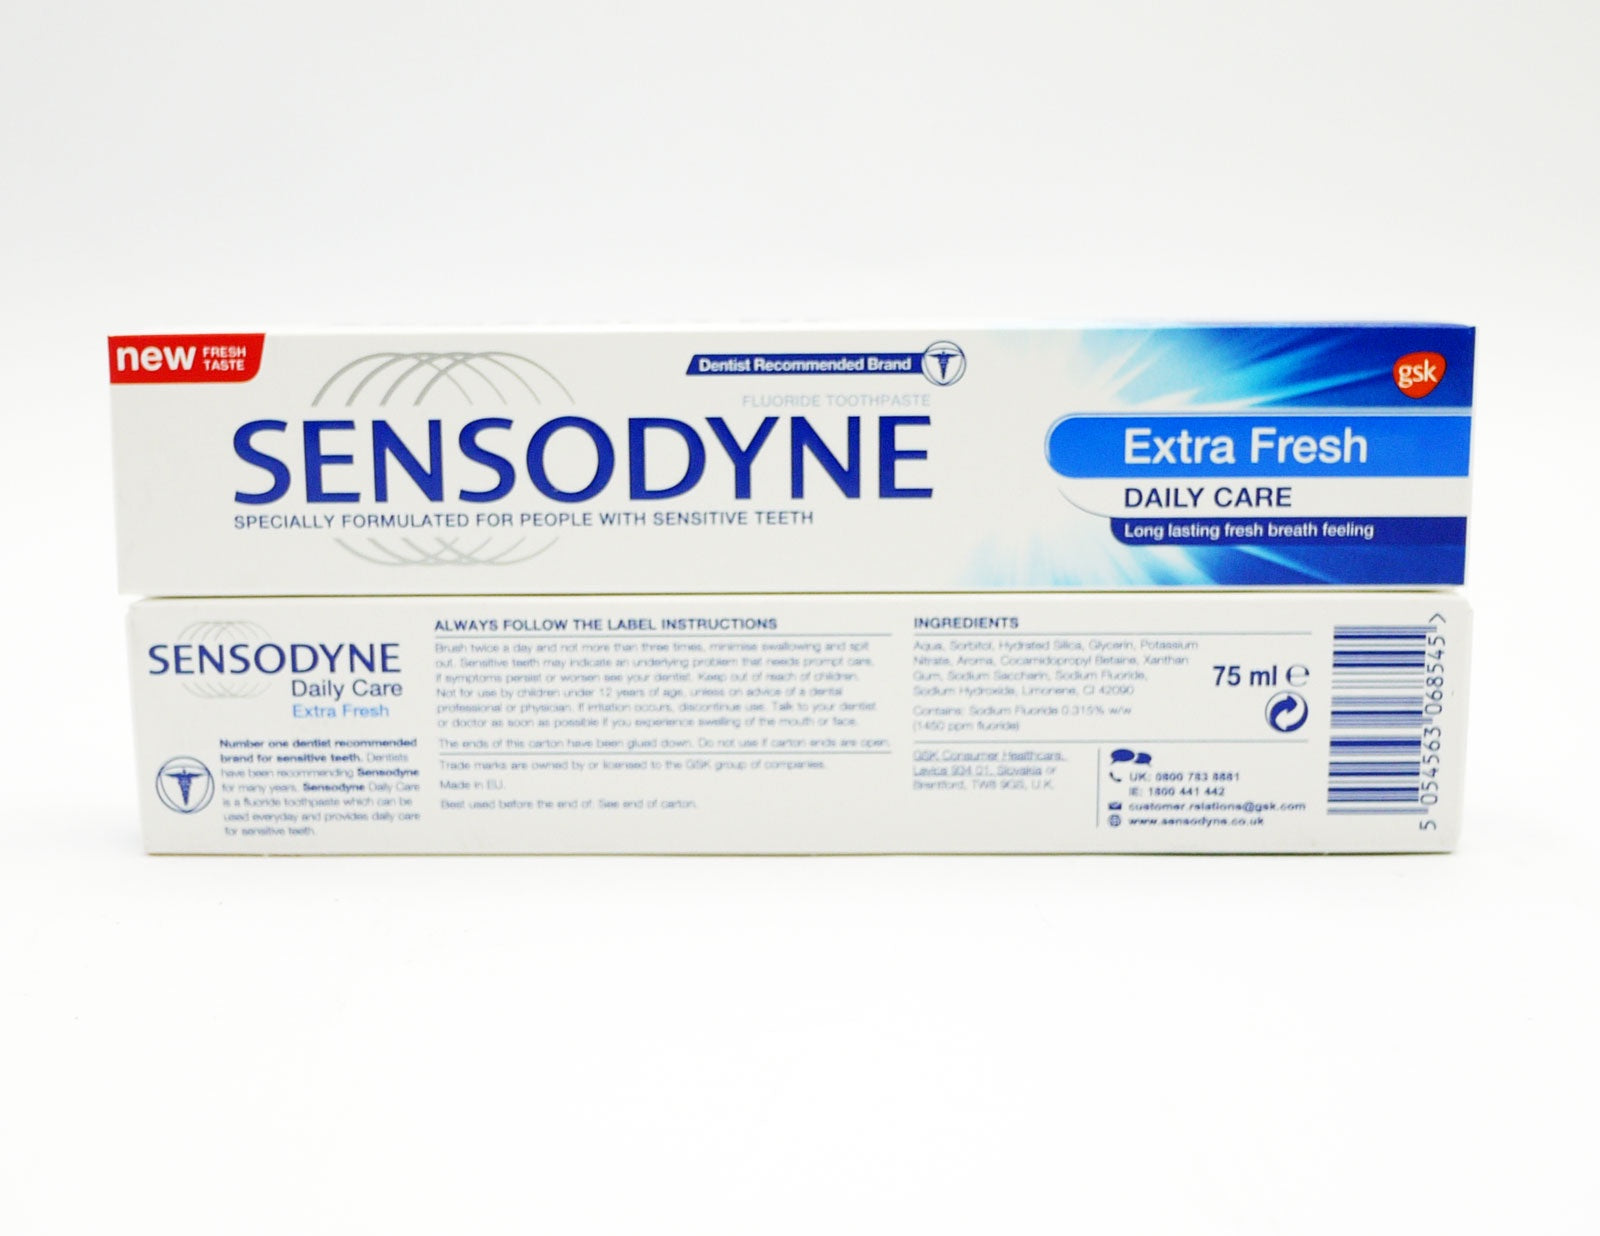 Sensodyne Toothpaste Daily Care Extra Fresh 75ml*